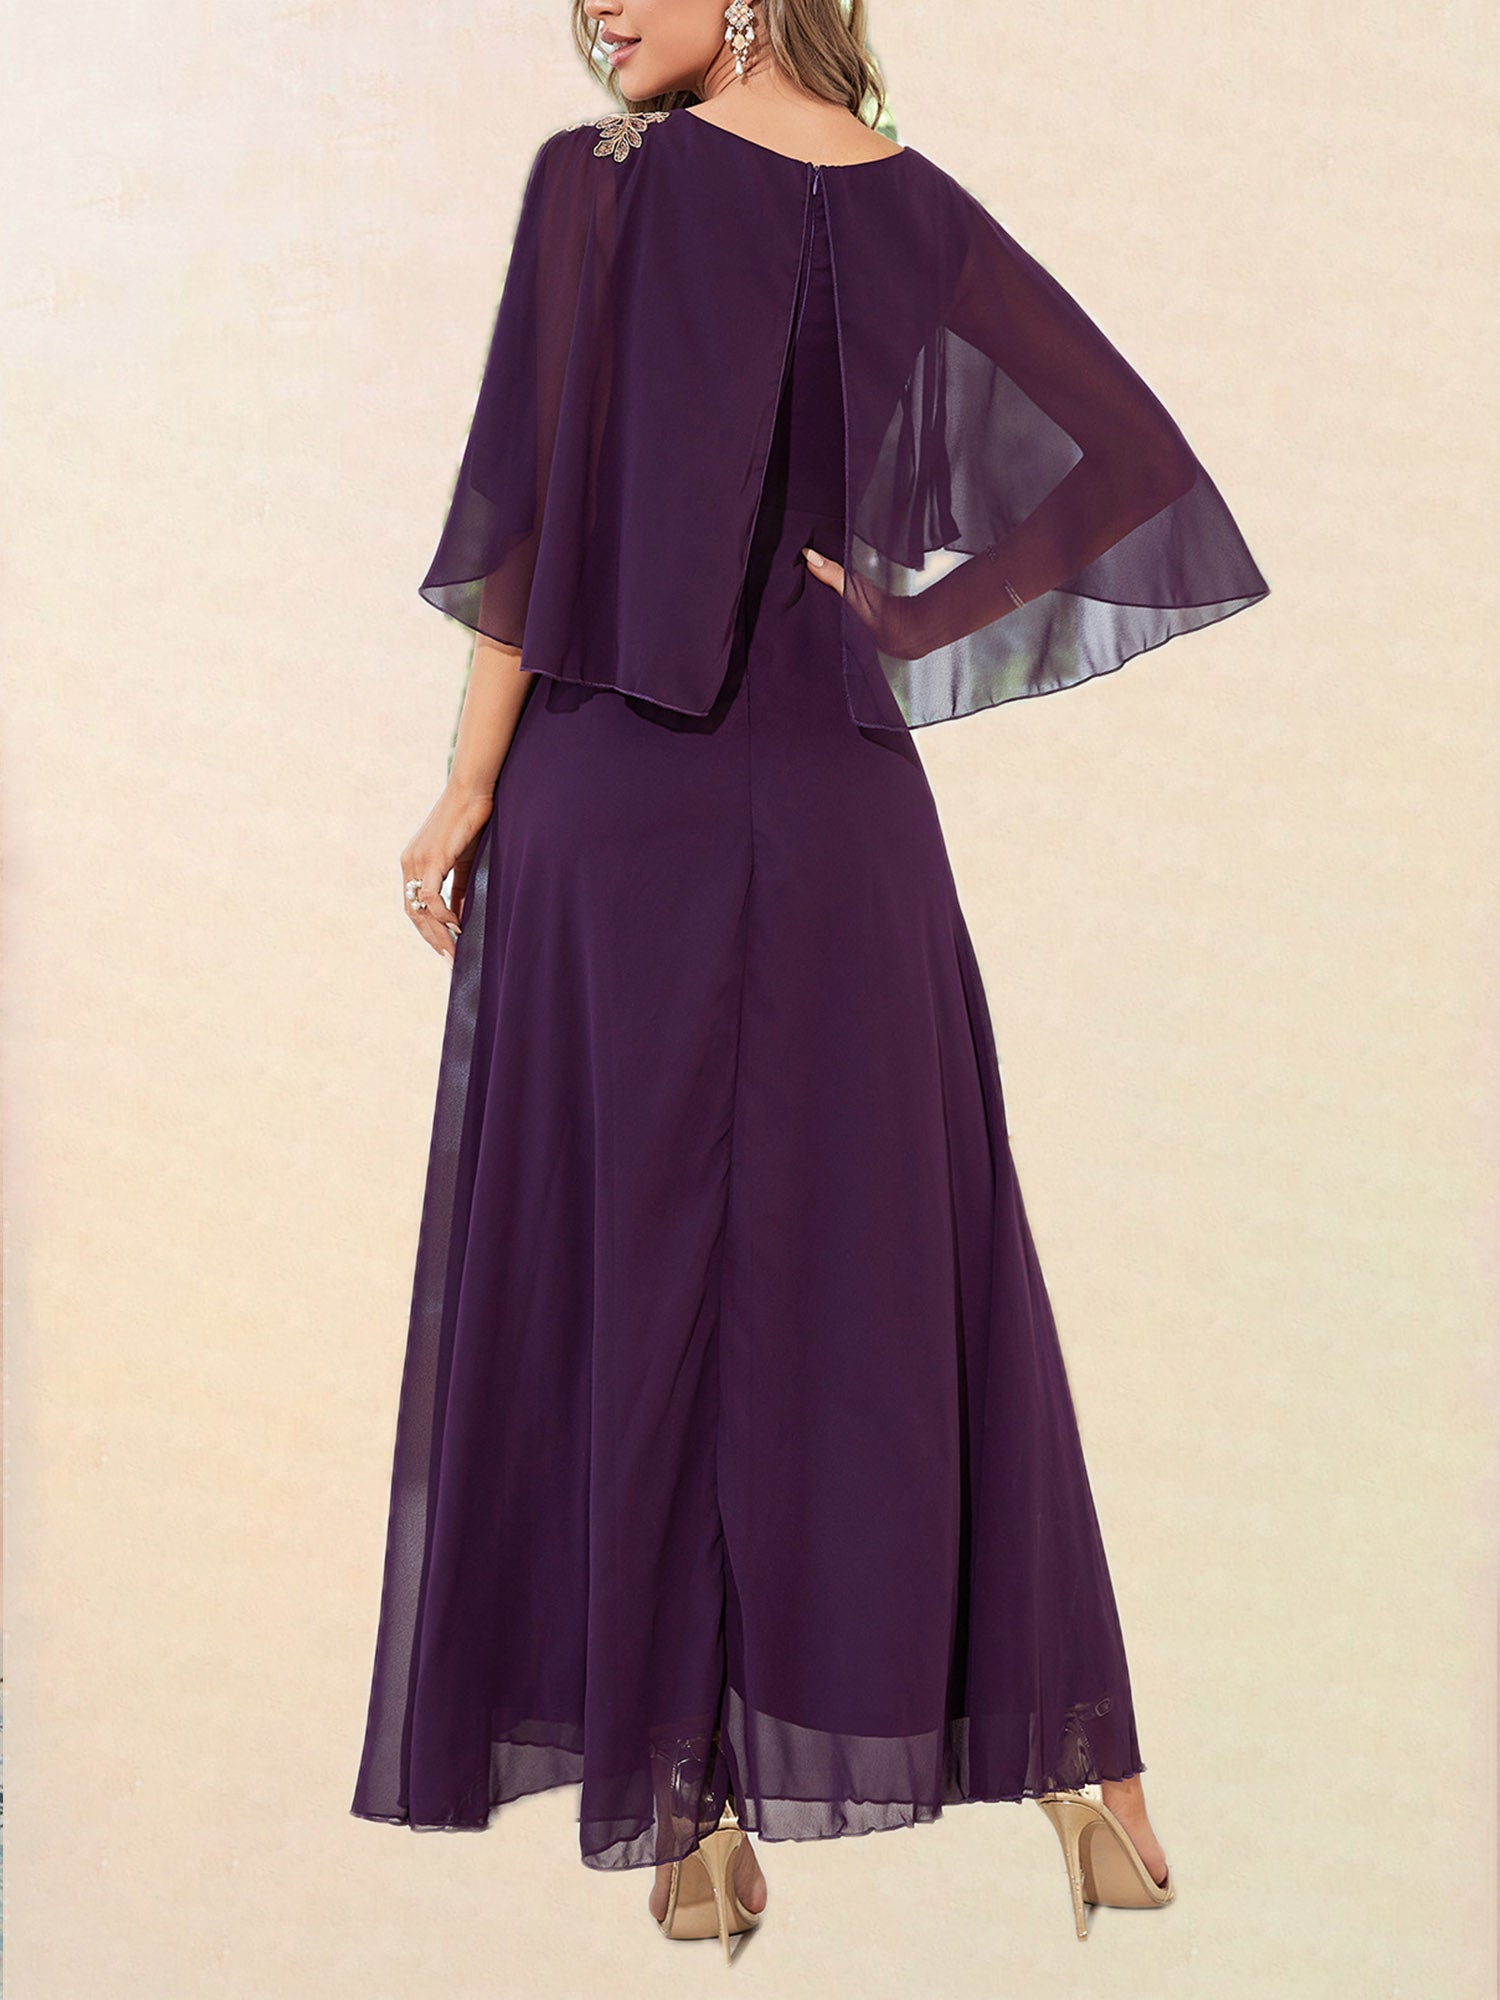 Lace A-Line Scoop Neck Half Sleeves-Dress-BM00050